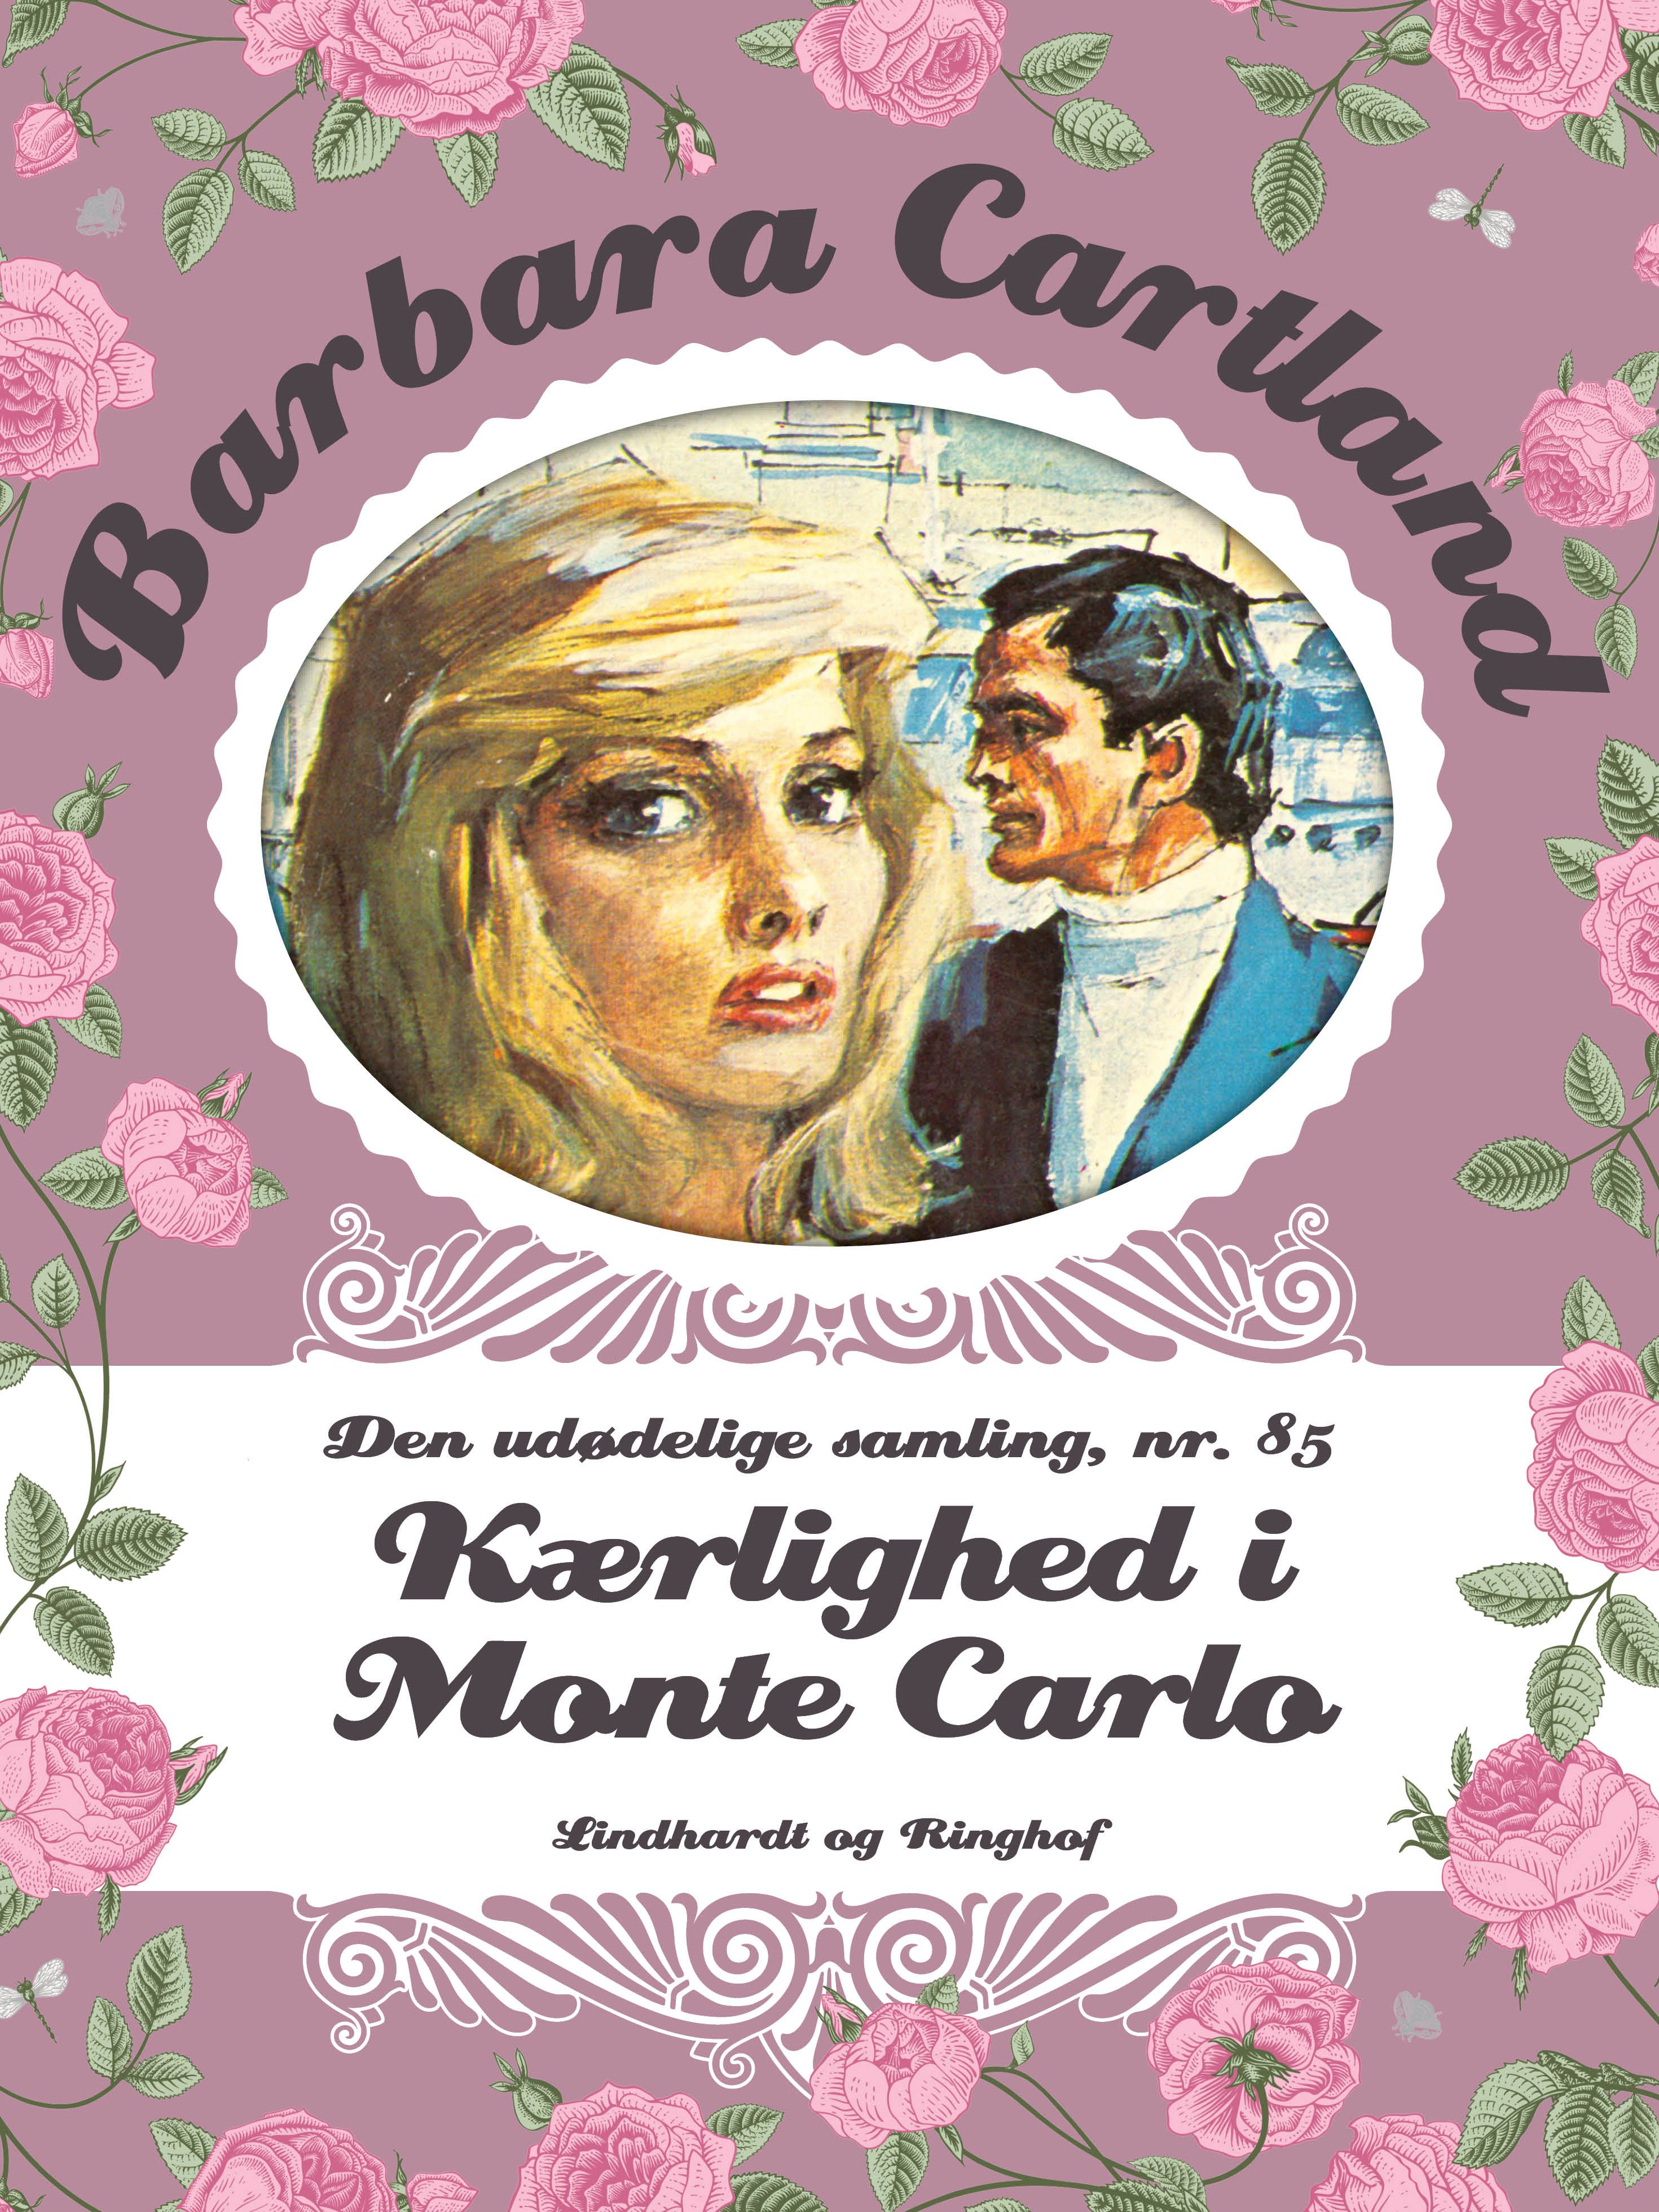 Kærlighed i Monte Carlo, audiobook by Barbara Cartland